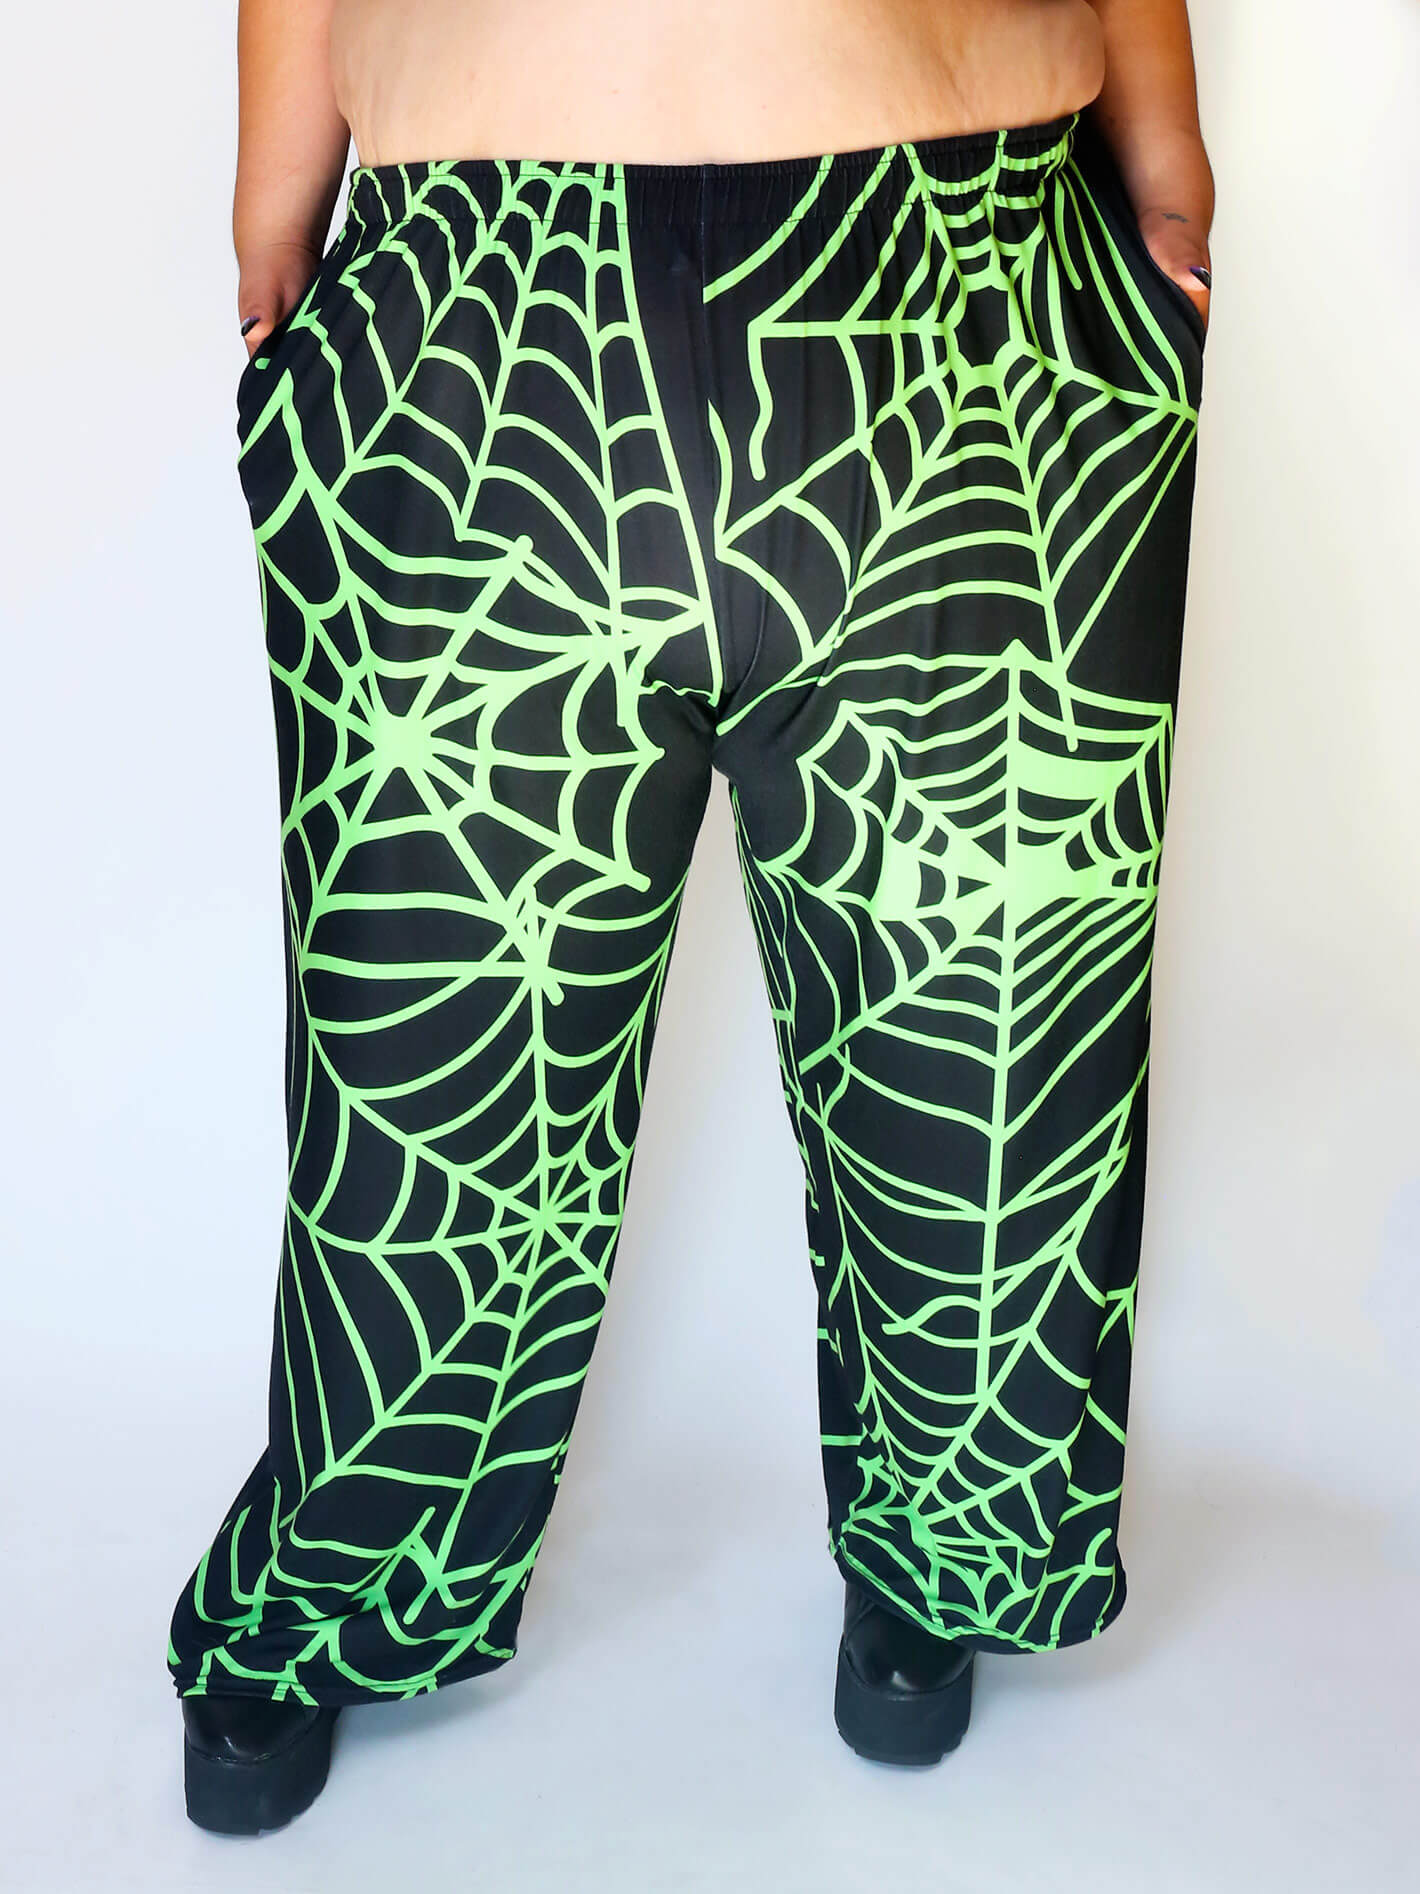 Plus size gothic spiderweb pants.